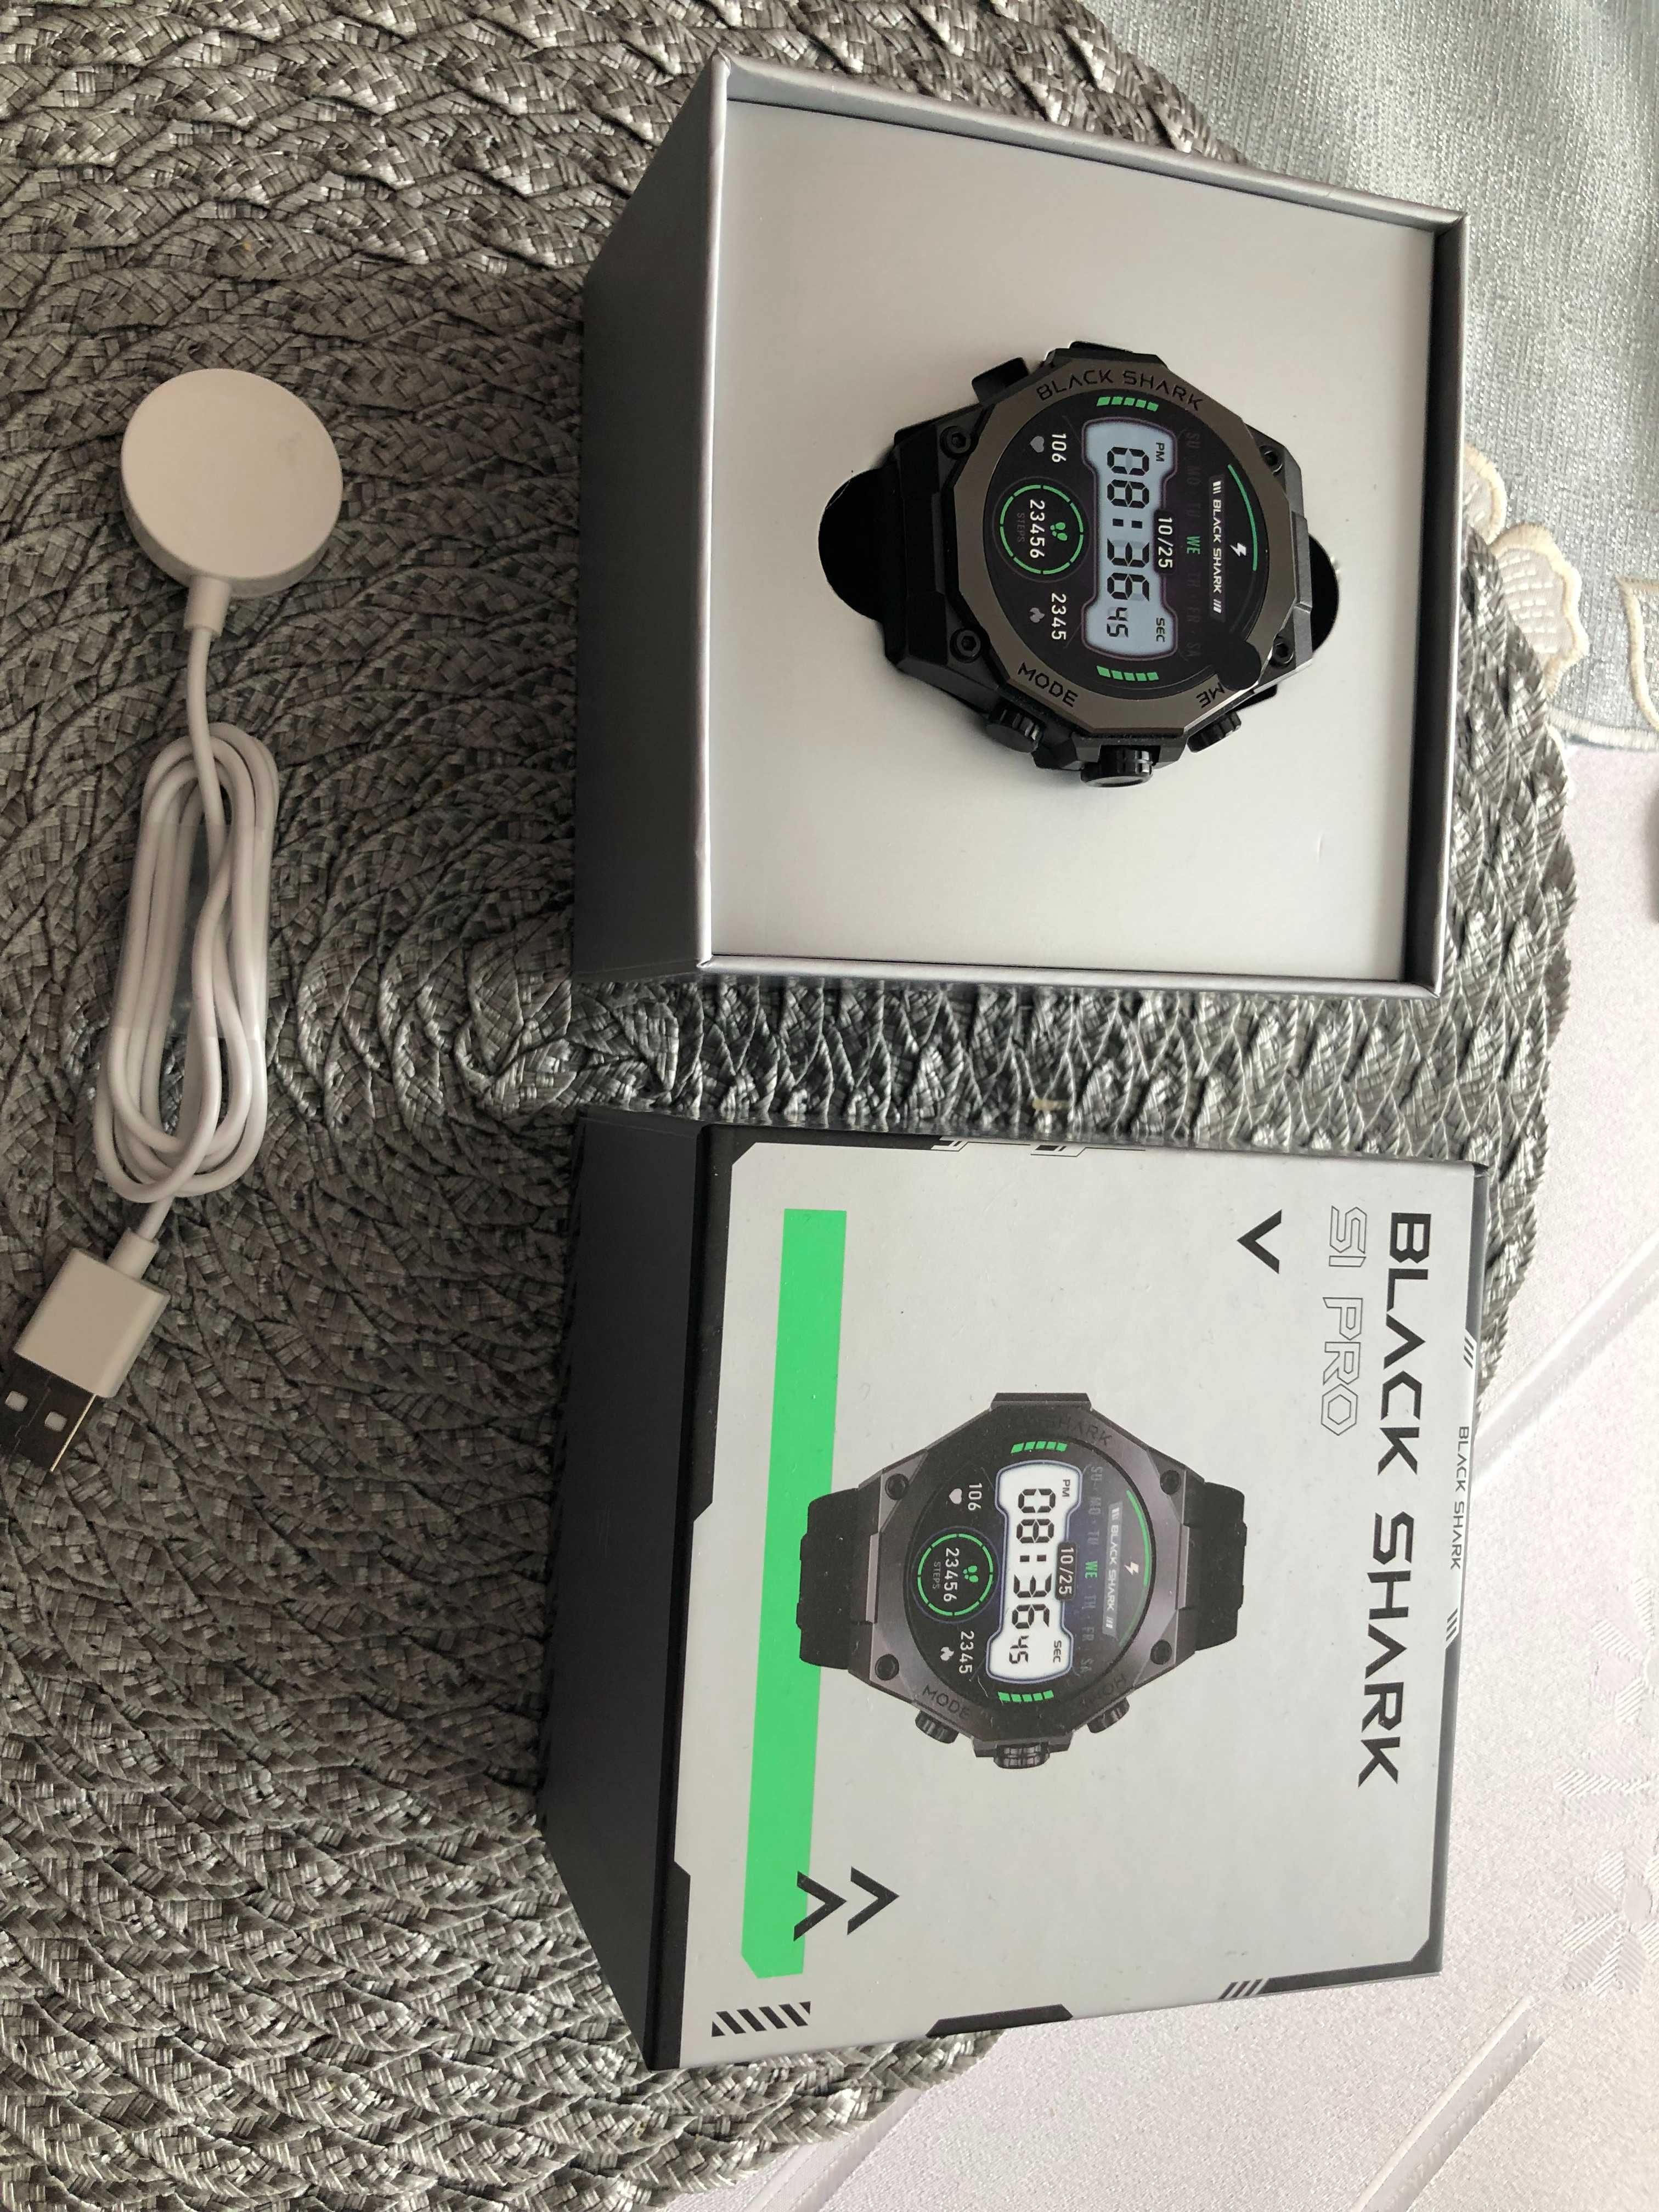 Smartwatch Black Shark S1 Pro - zaproponuj cenę